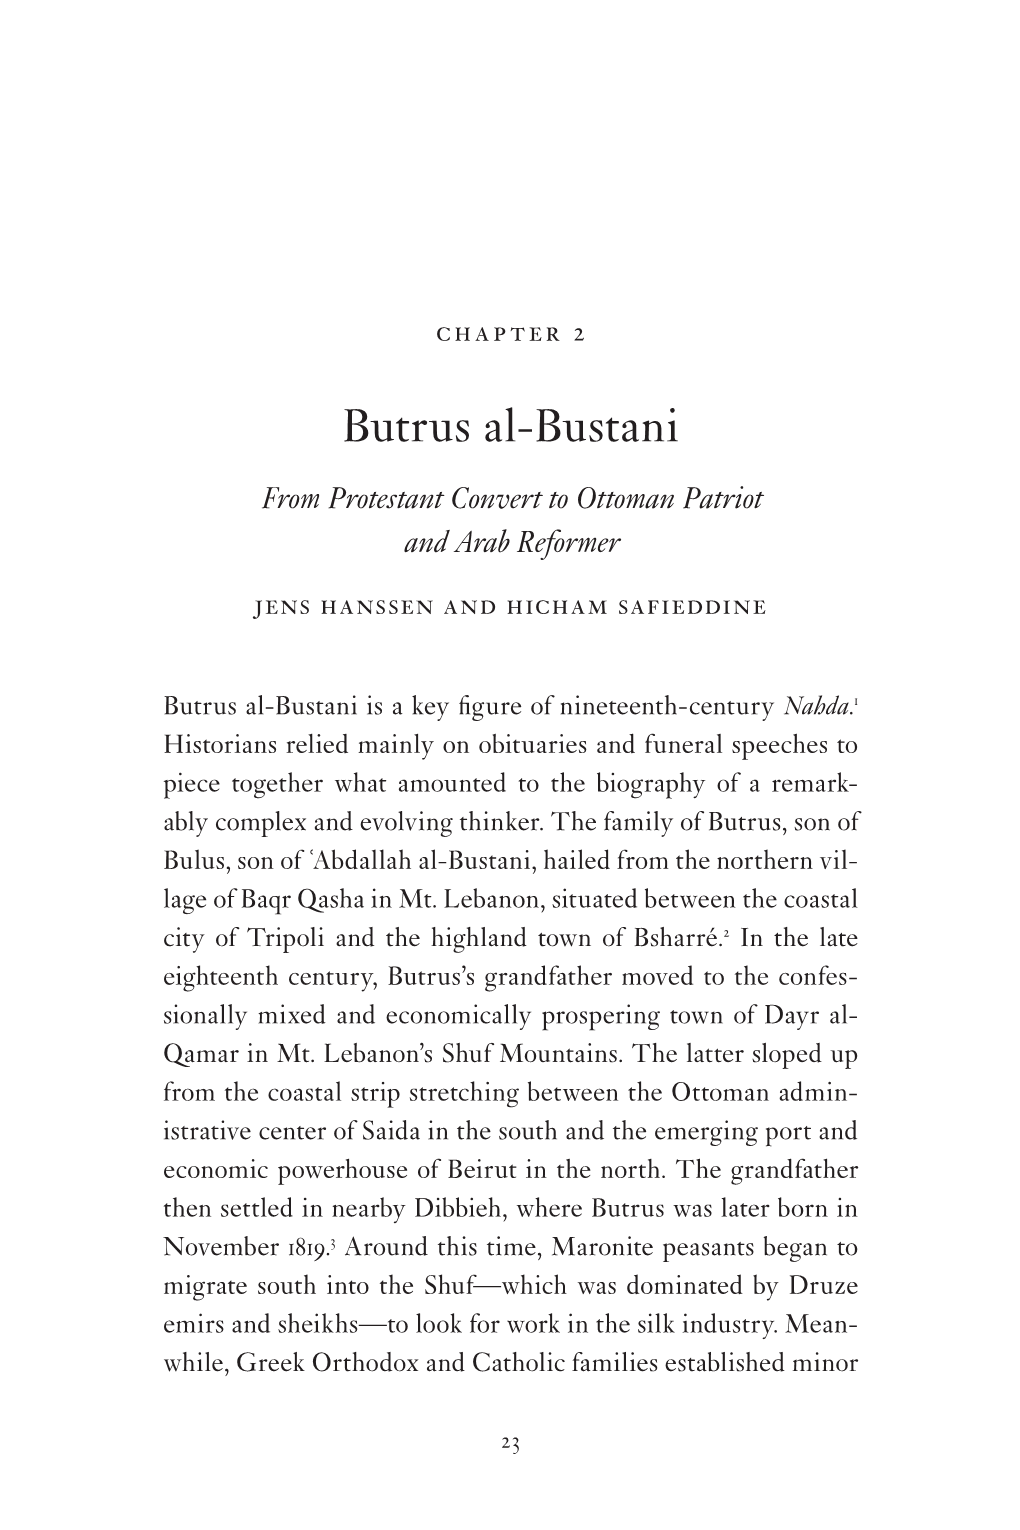 Butrus Al-Bustani from Protestant Convert to Ottoman Patriot and Arab Reformer Jens Hanssen and Hicham Safieddine